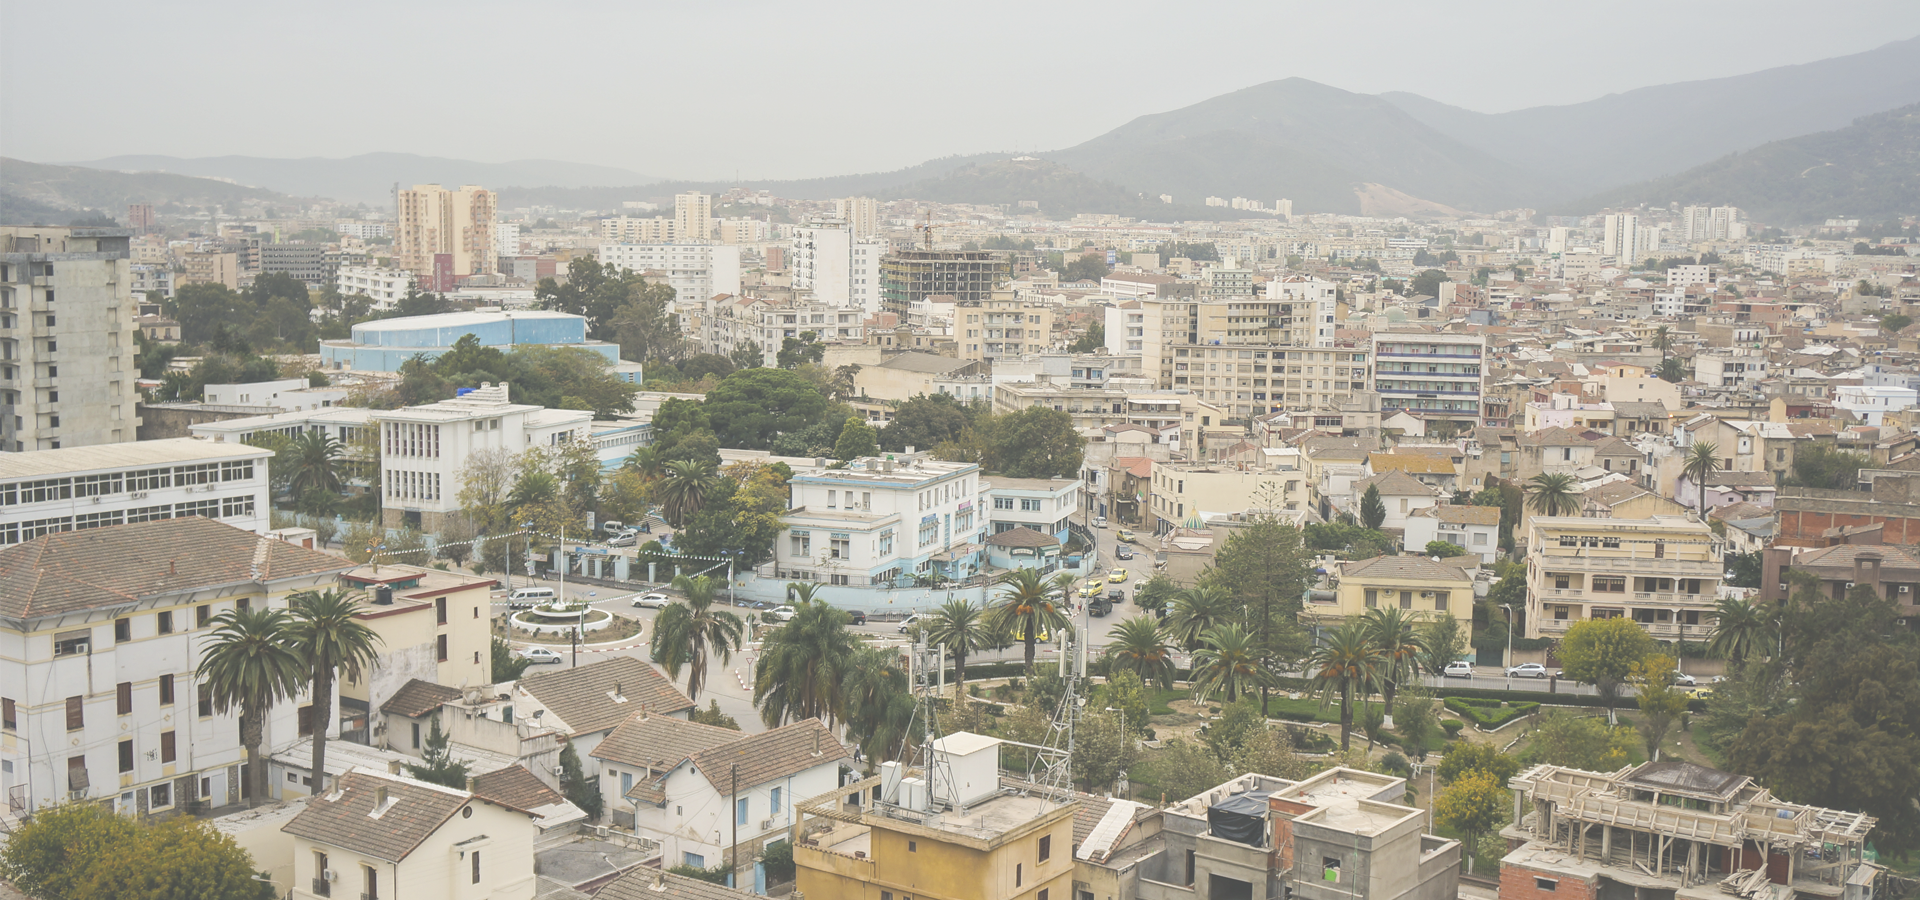 <b>Annaba, Algeria</b>